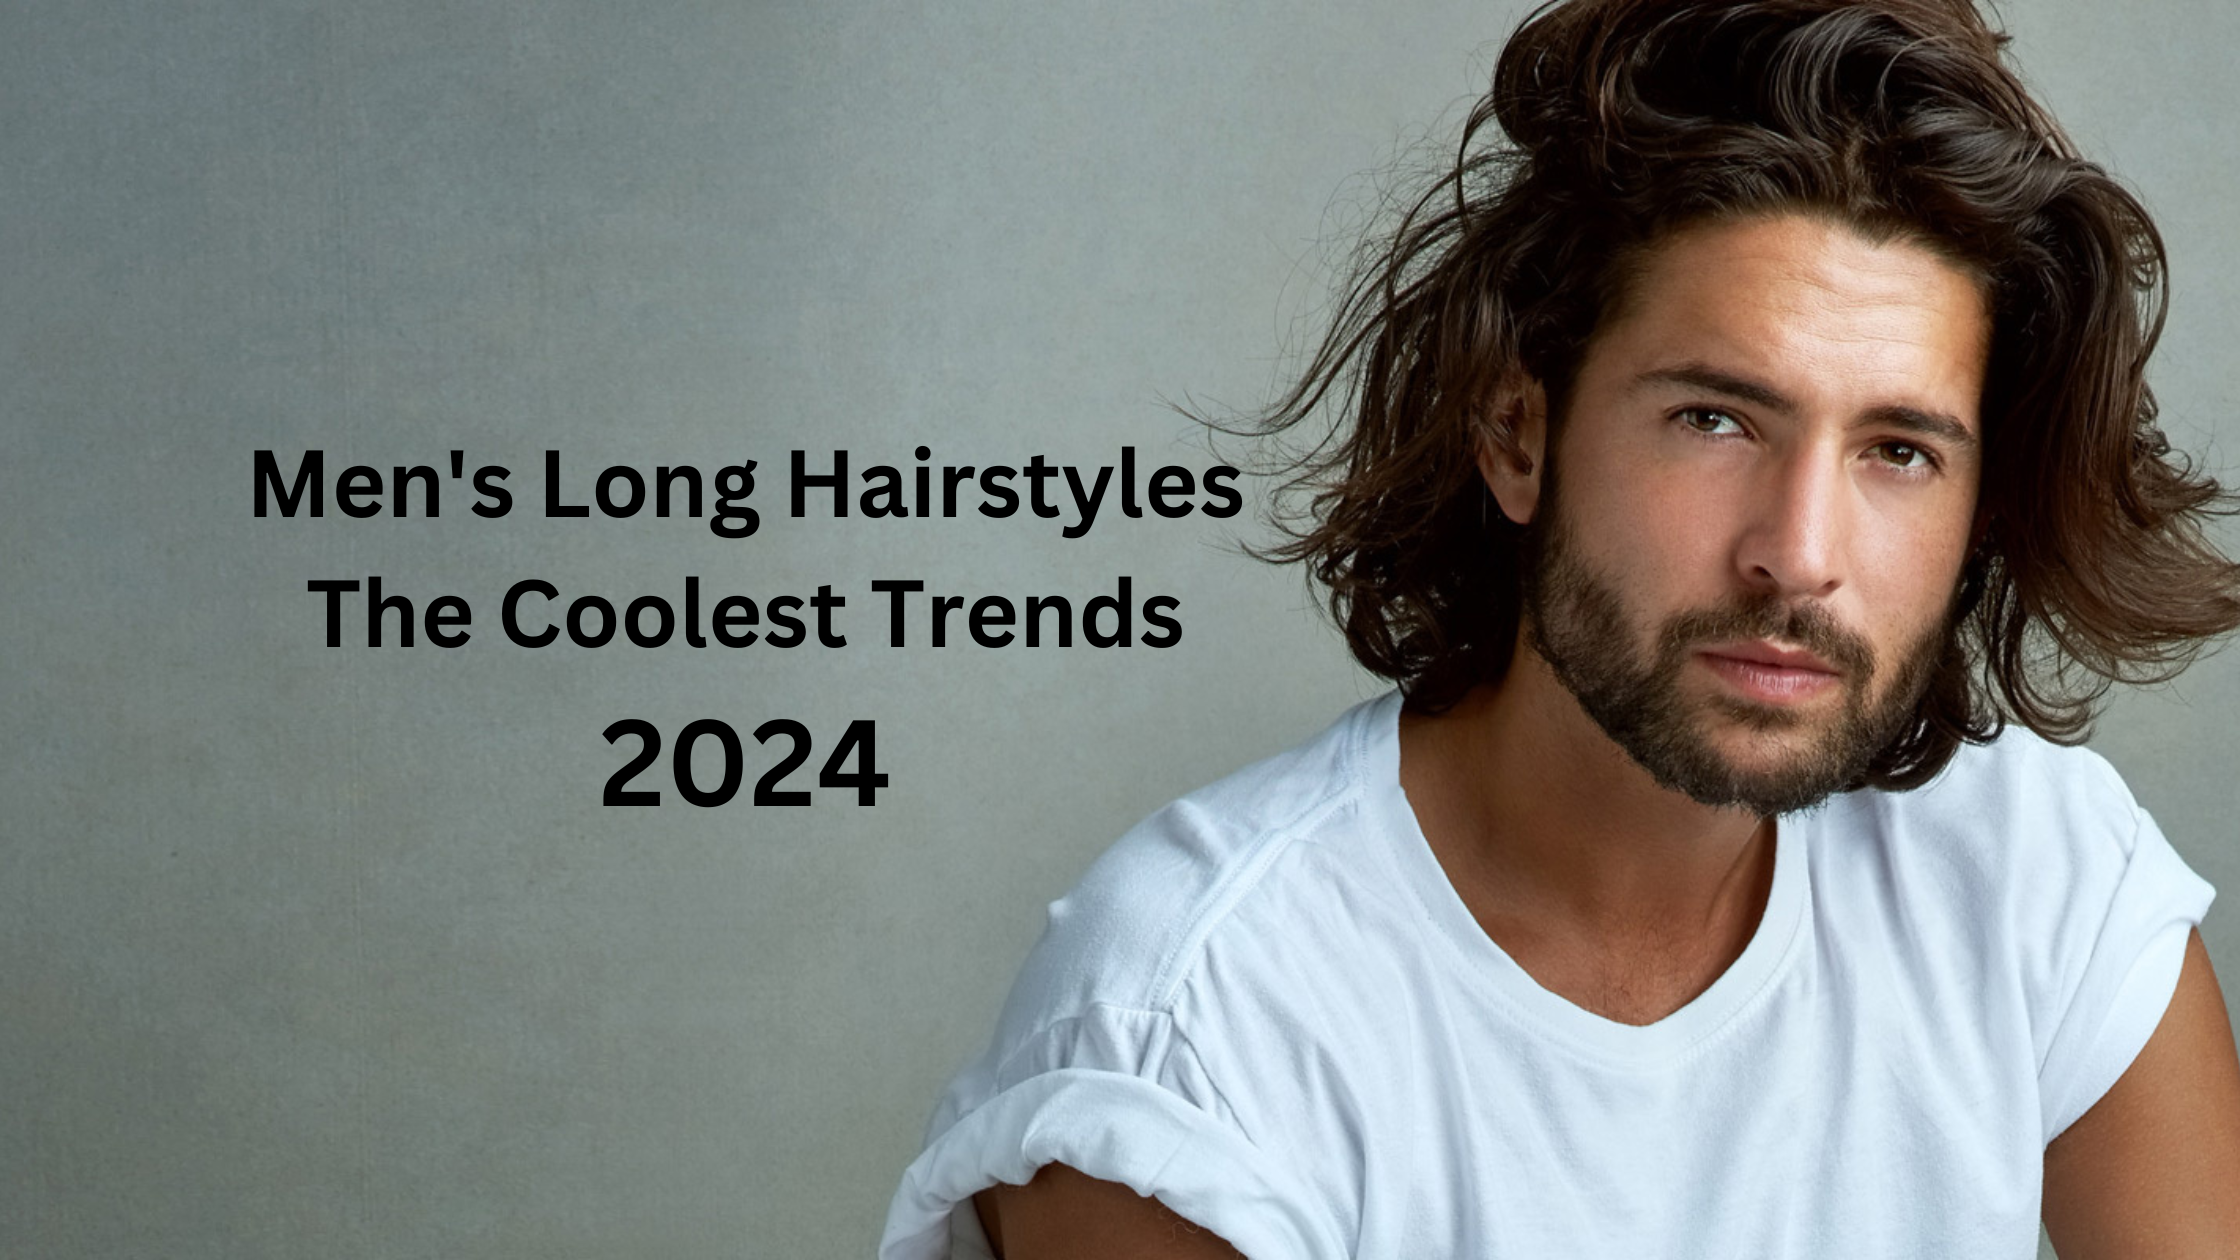 1950s Men's Hairstyles Still on Trend Today – VAGA magazine